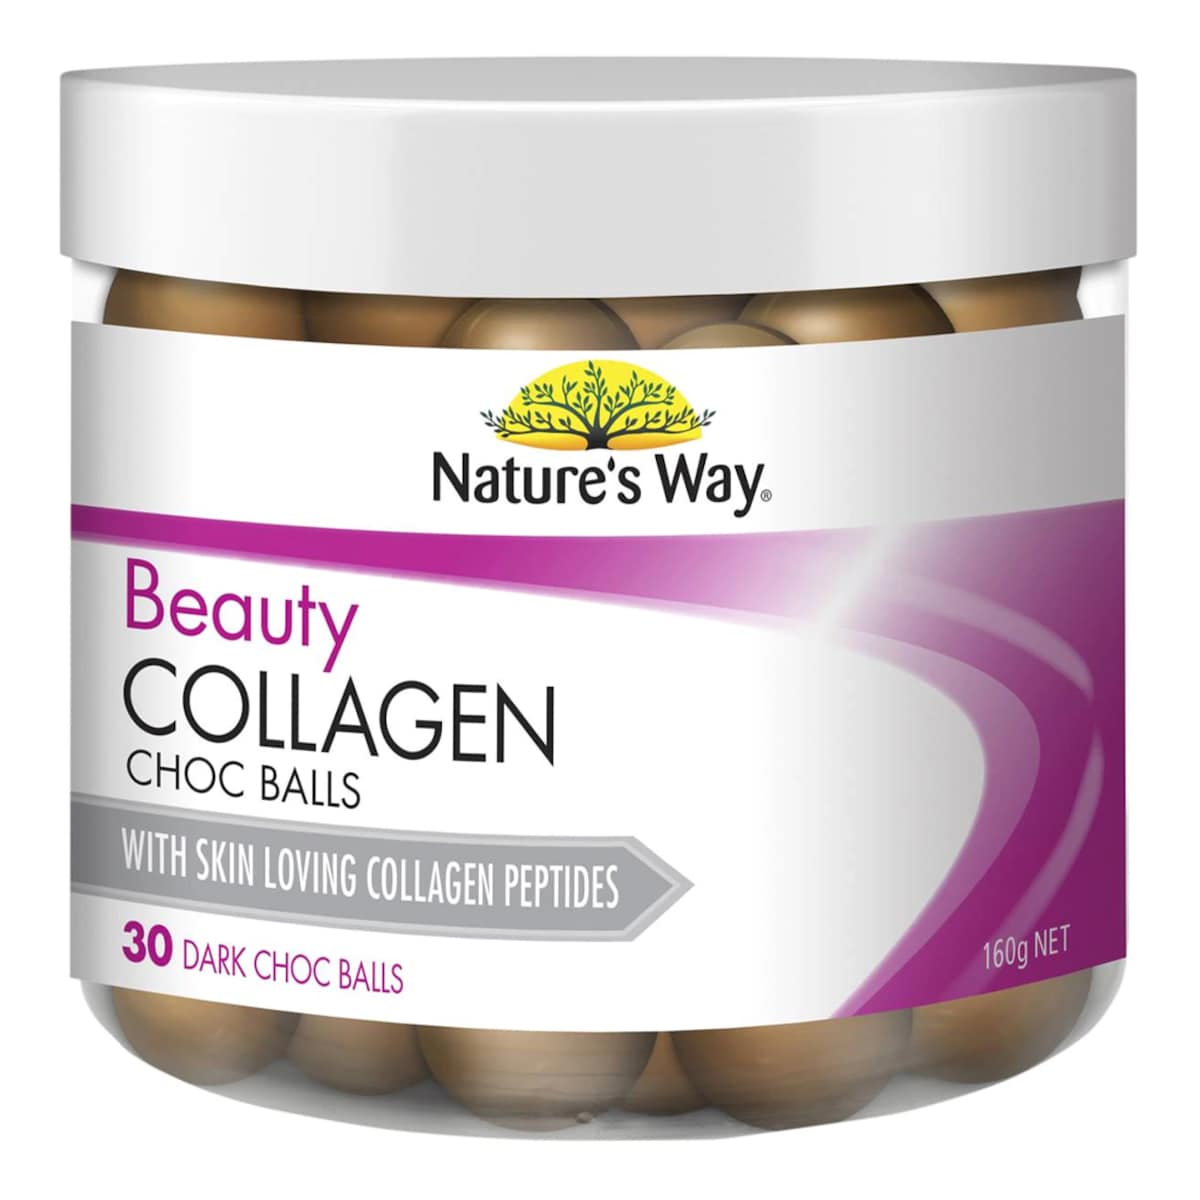 Natures Way Beauty Collagen Dark Choc Balls 30 Pack